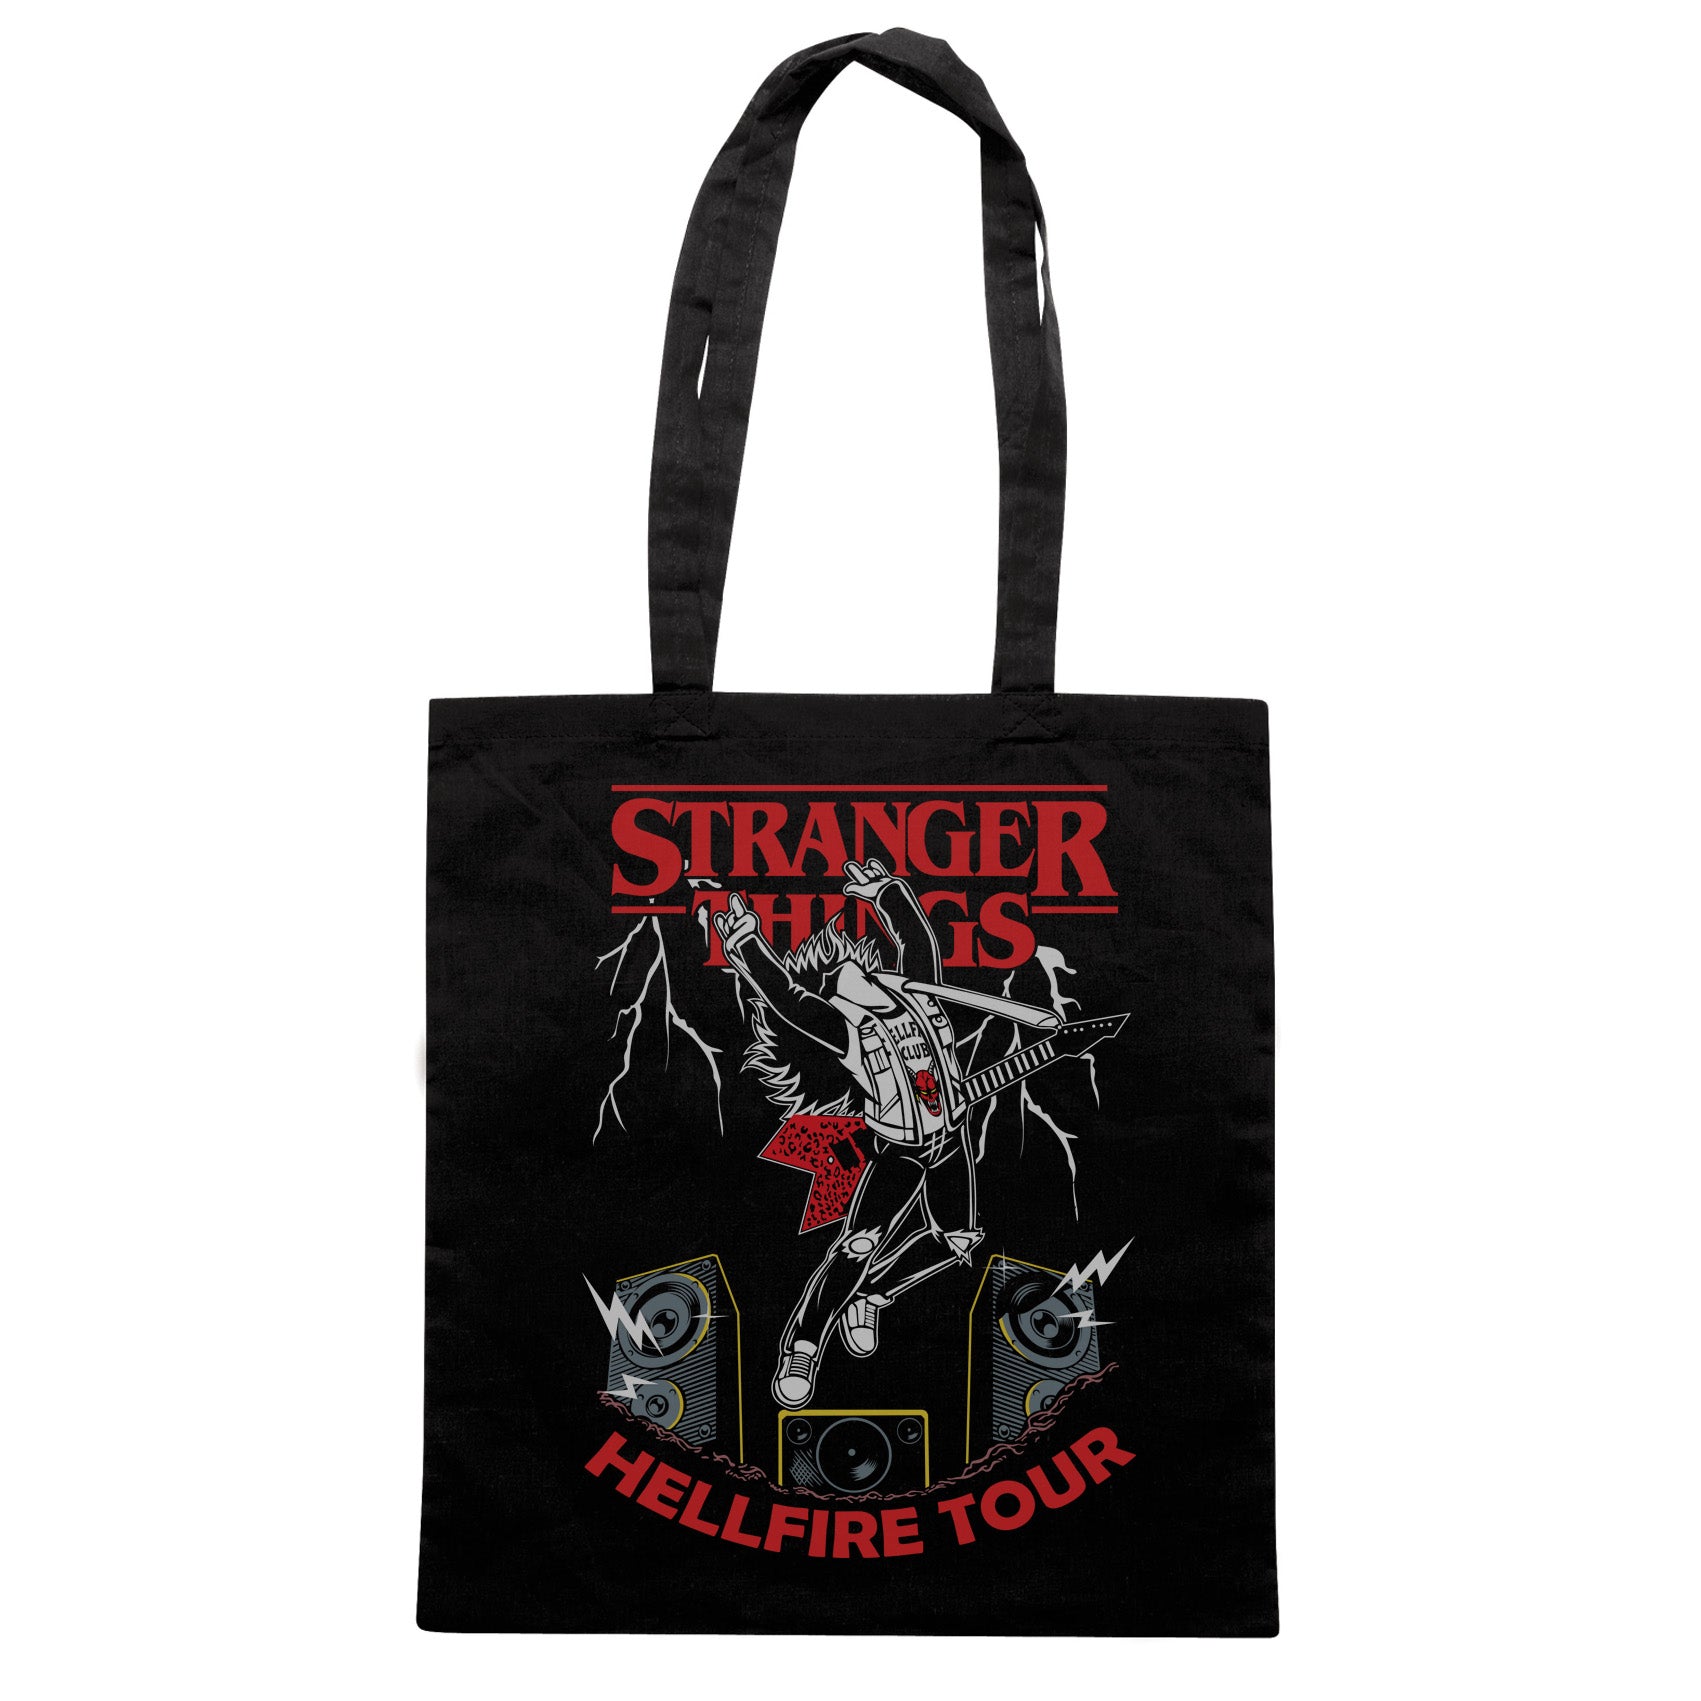 CUC - Hell Fire Tour - Stranger- Bag - ChooseUrColor - CUC chooseurcolor